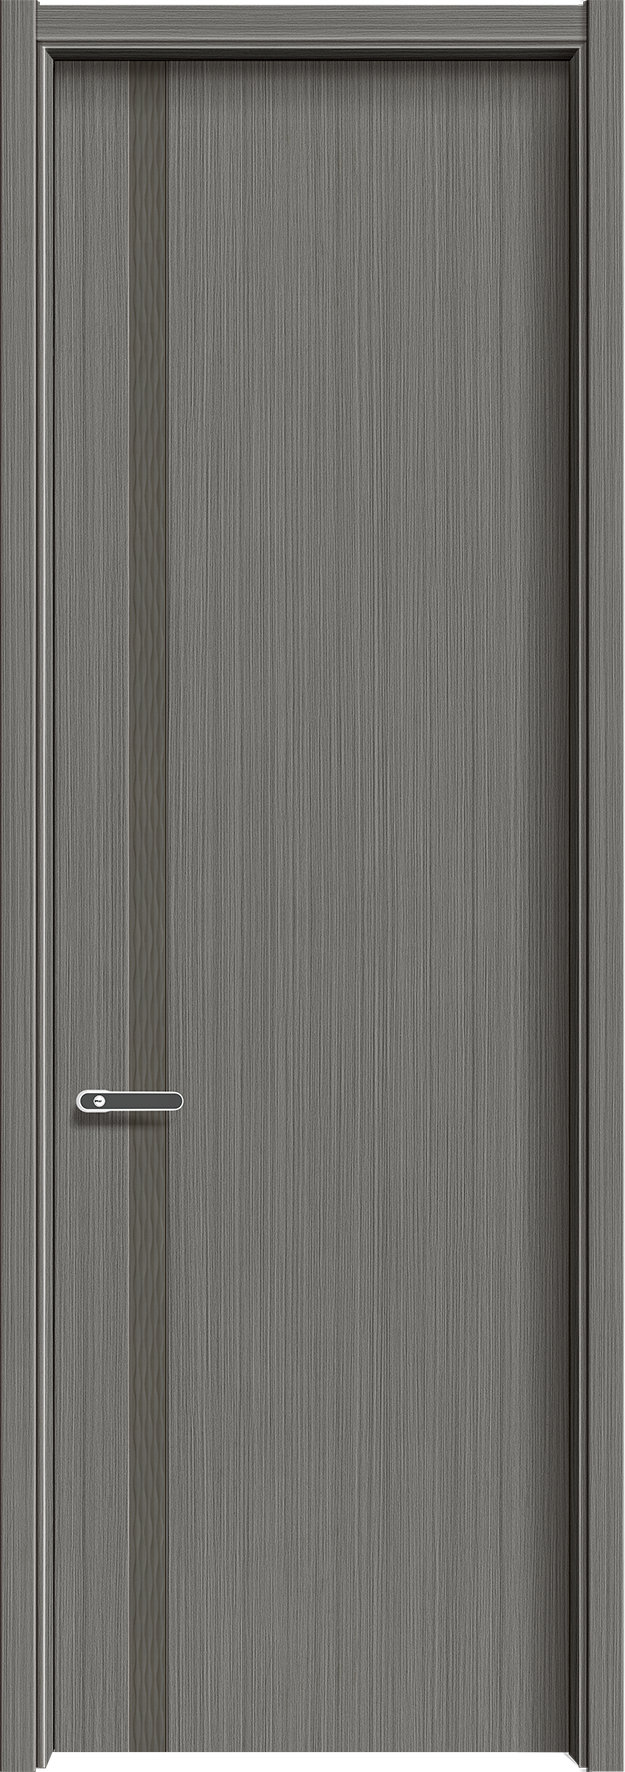 MELAMINE FINISHING  - CARBON  WOOD DOOR (CARBON CRYSTAL BOARD) TA617-825